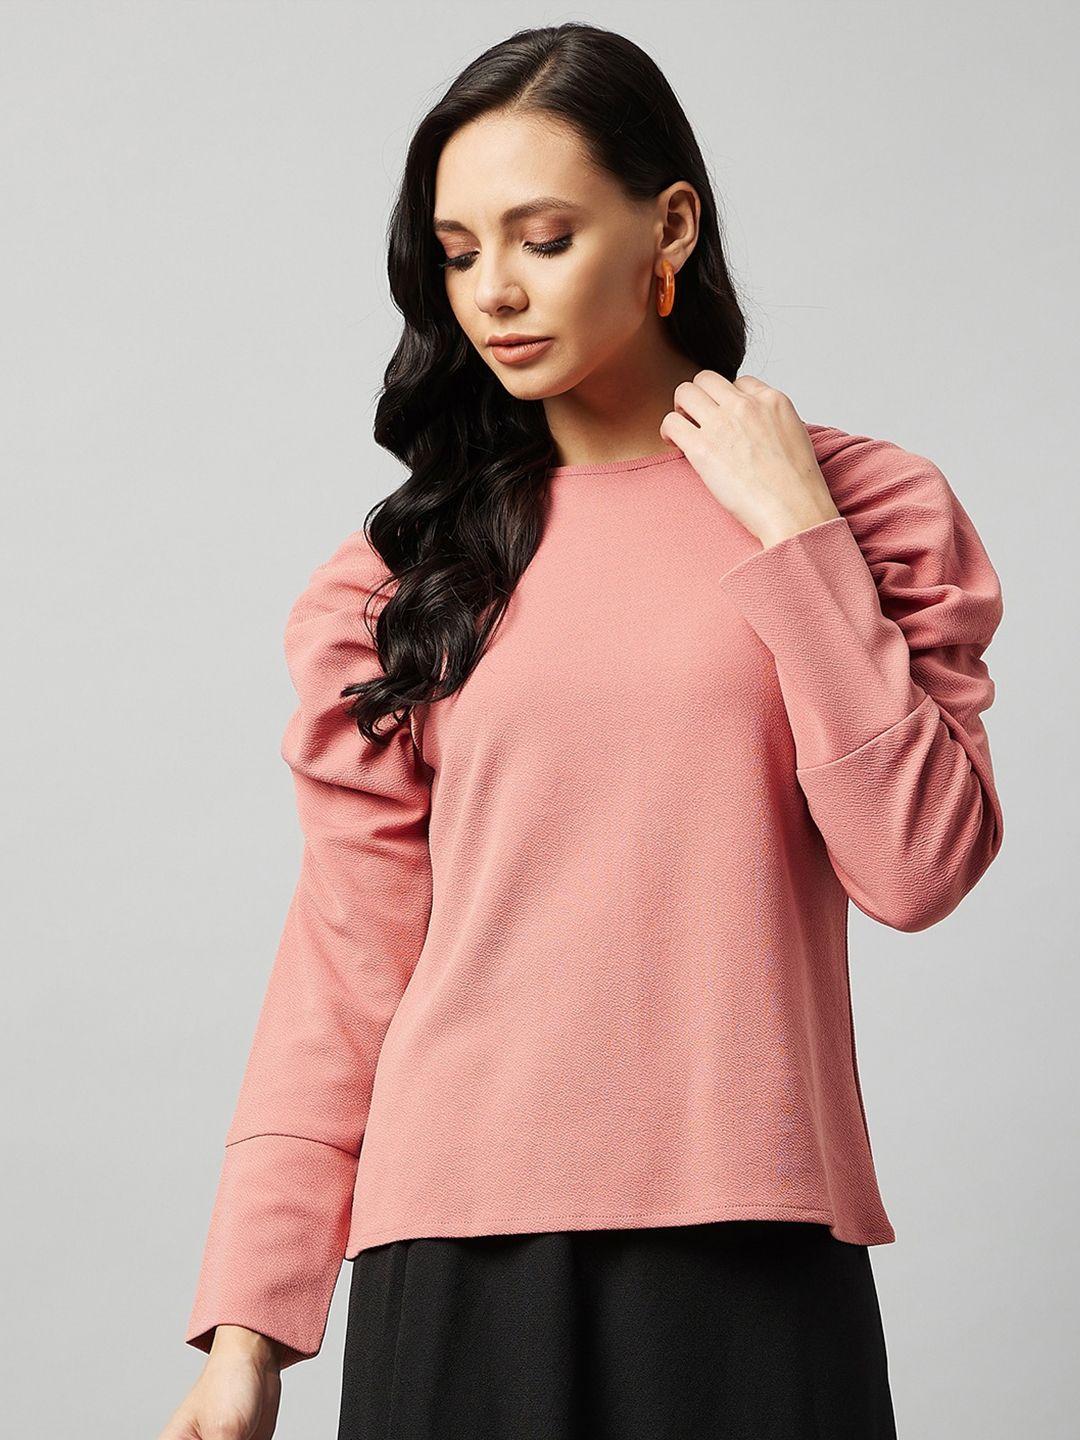 marie claire women pink puff sleeves regular top